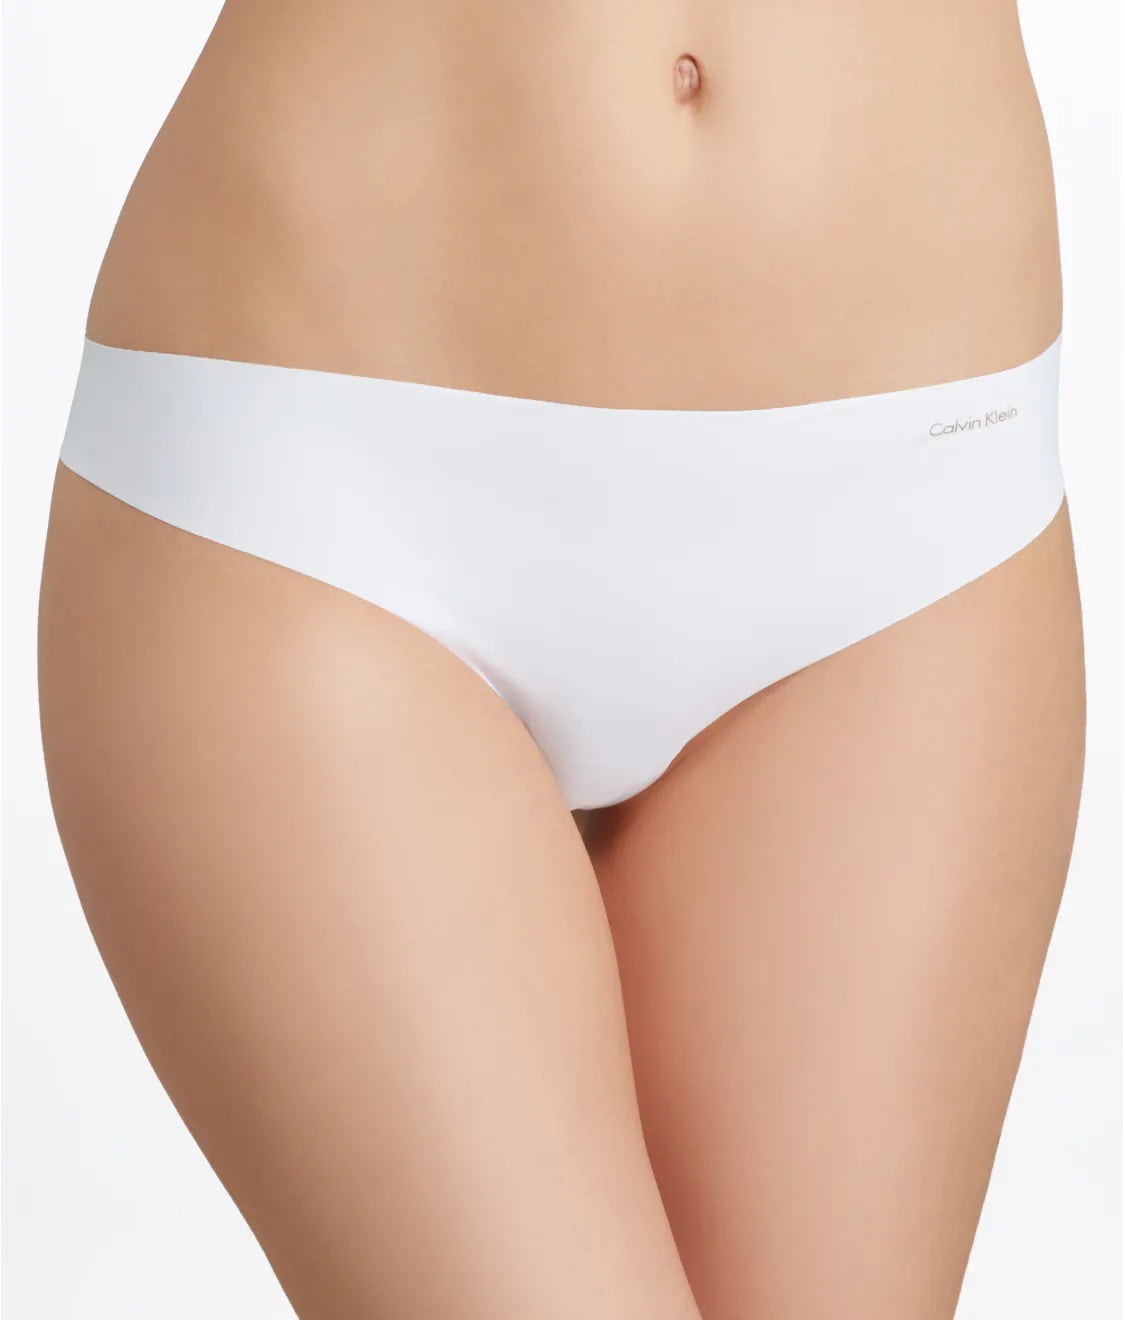 Calvin Klein Women's Invisibles Thong Panty, White, X-Small